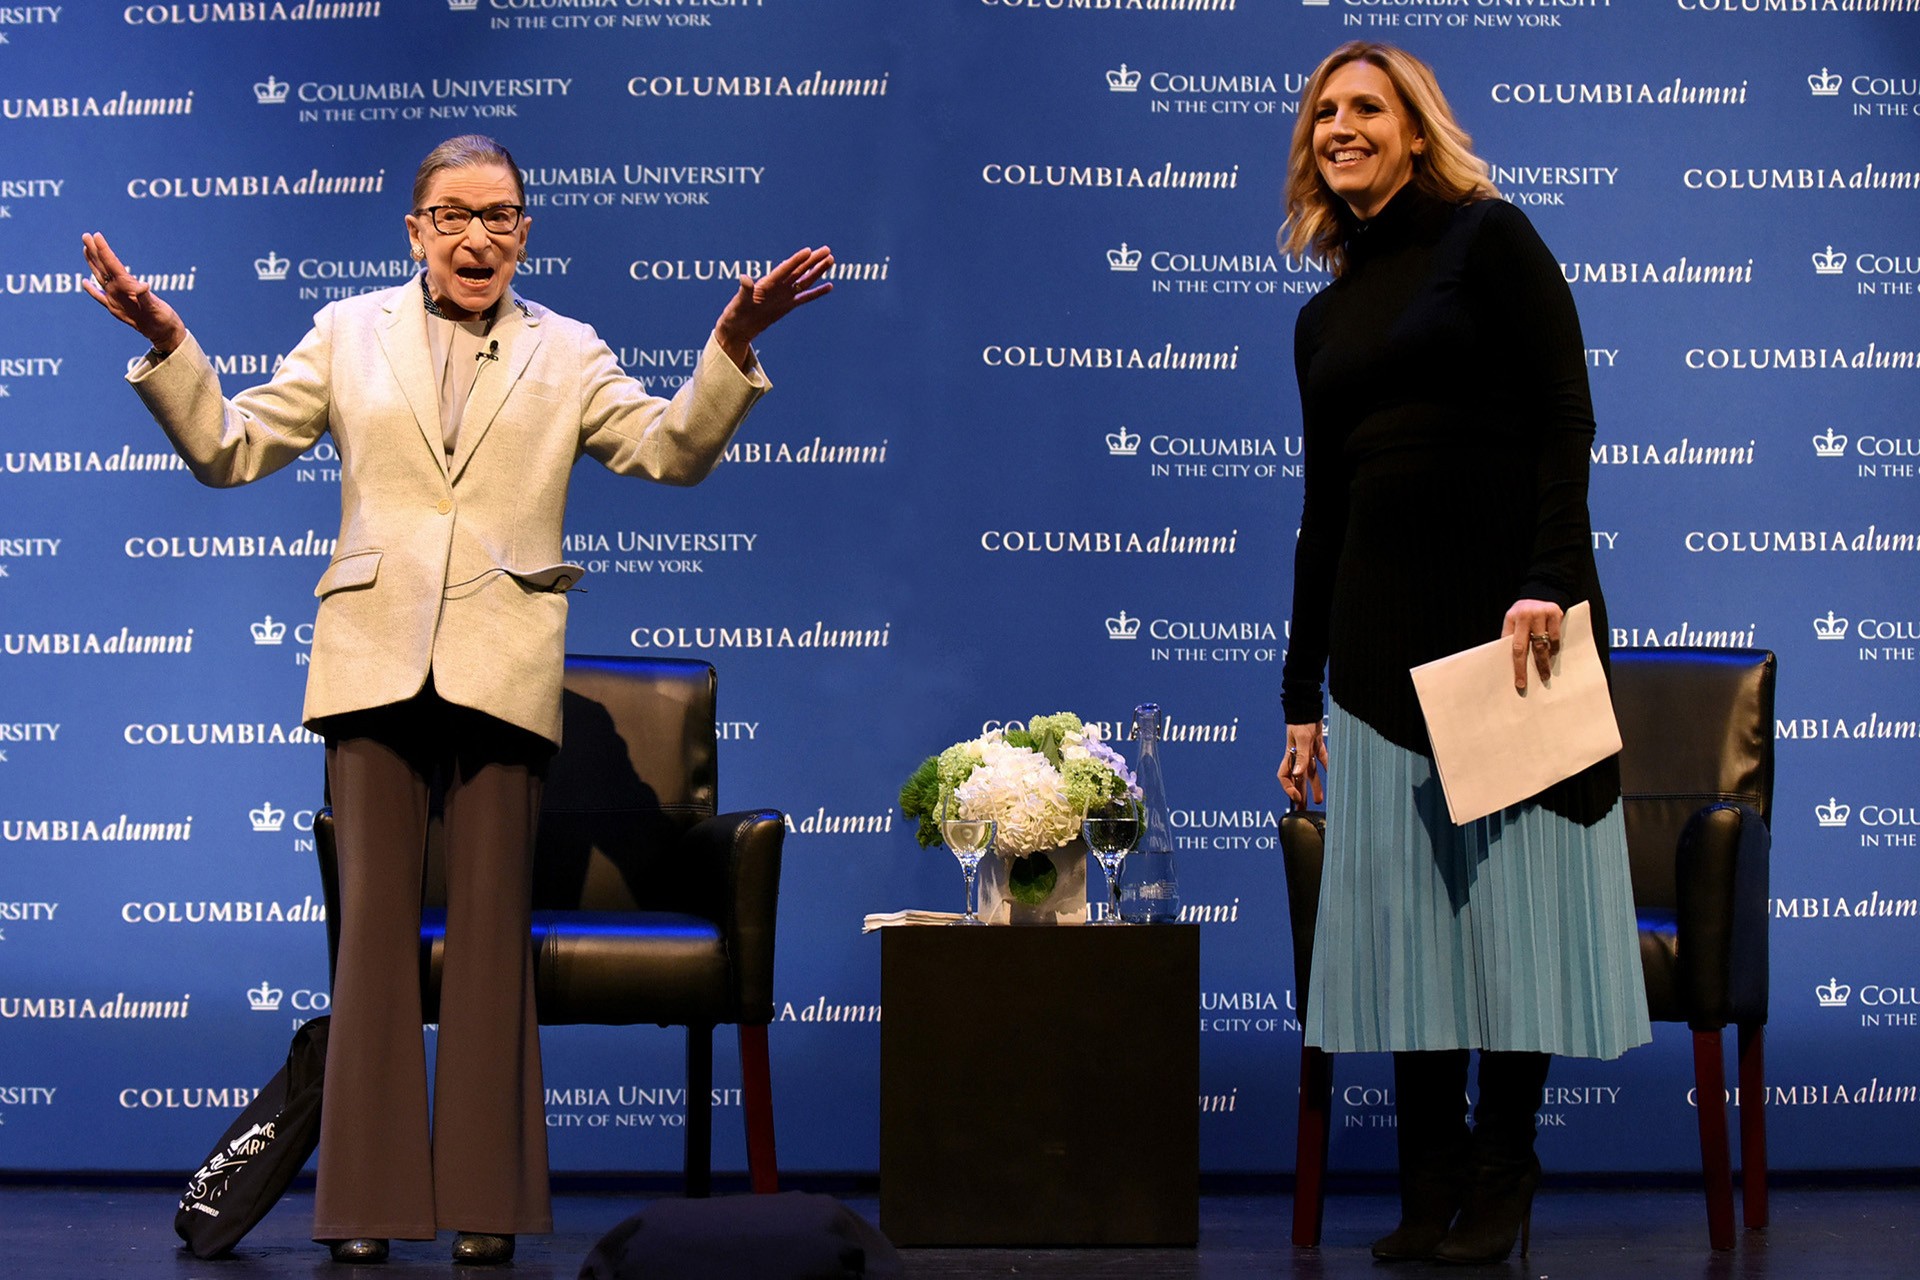 Supreme Court Justice Ruth Bader Ginsberg speaks to Columbia Alumni.